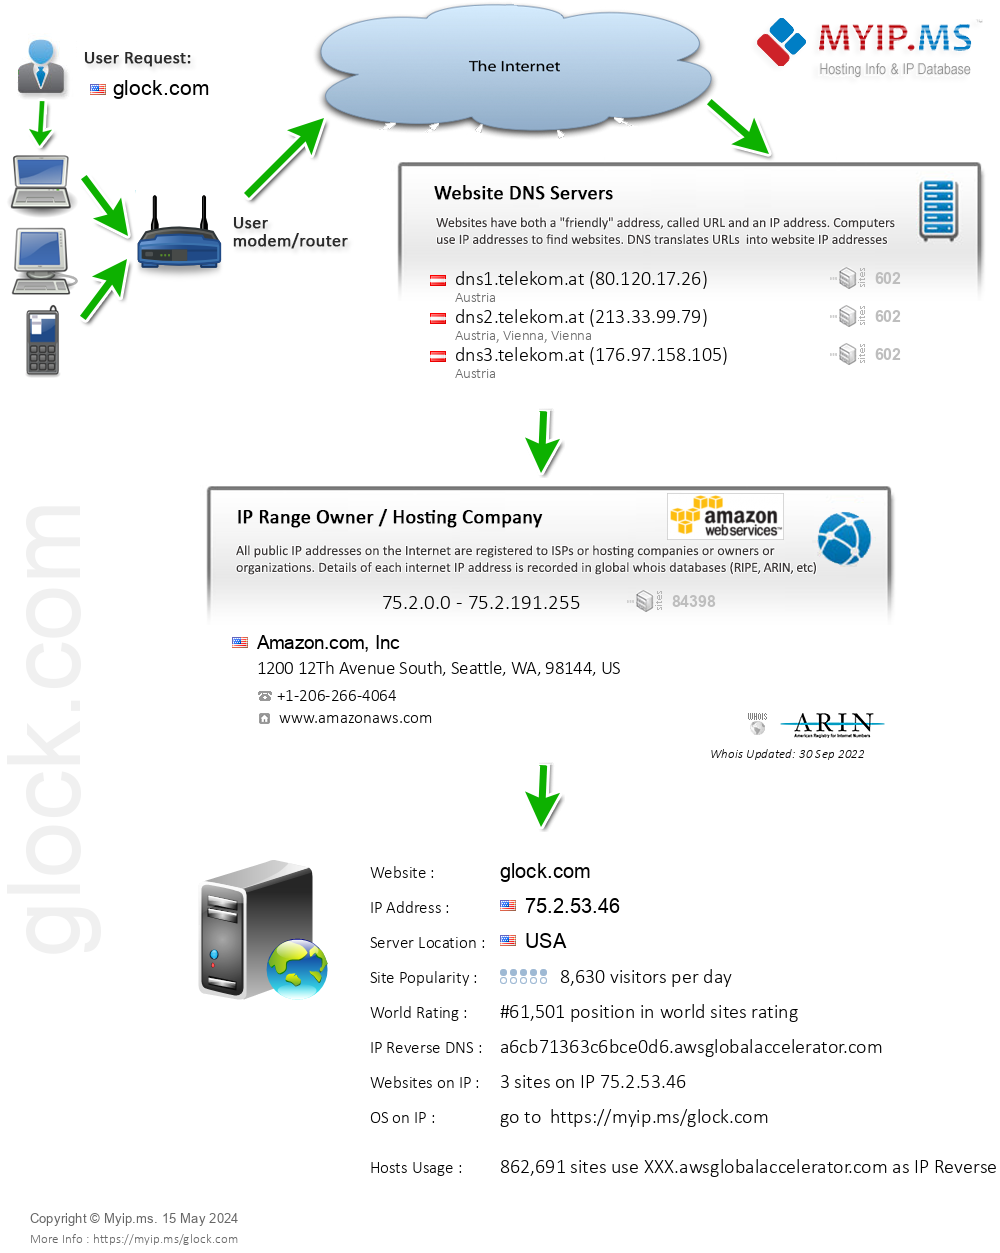 Glock.com - Website Hosting Visual IP Diagram